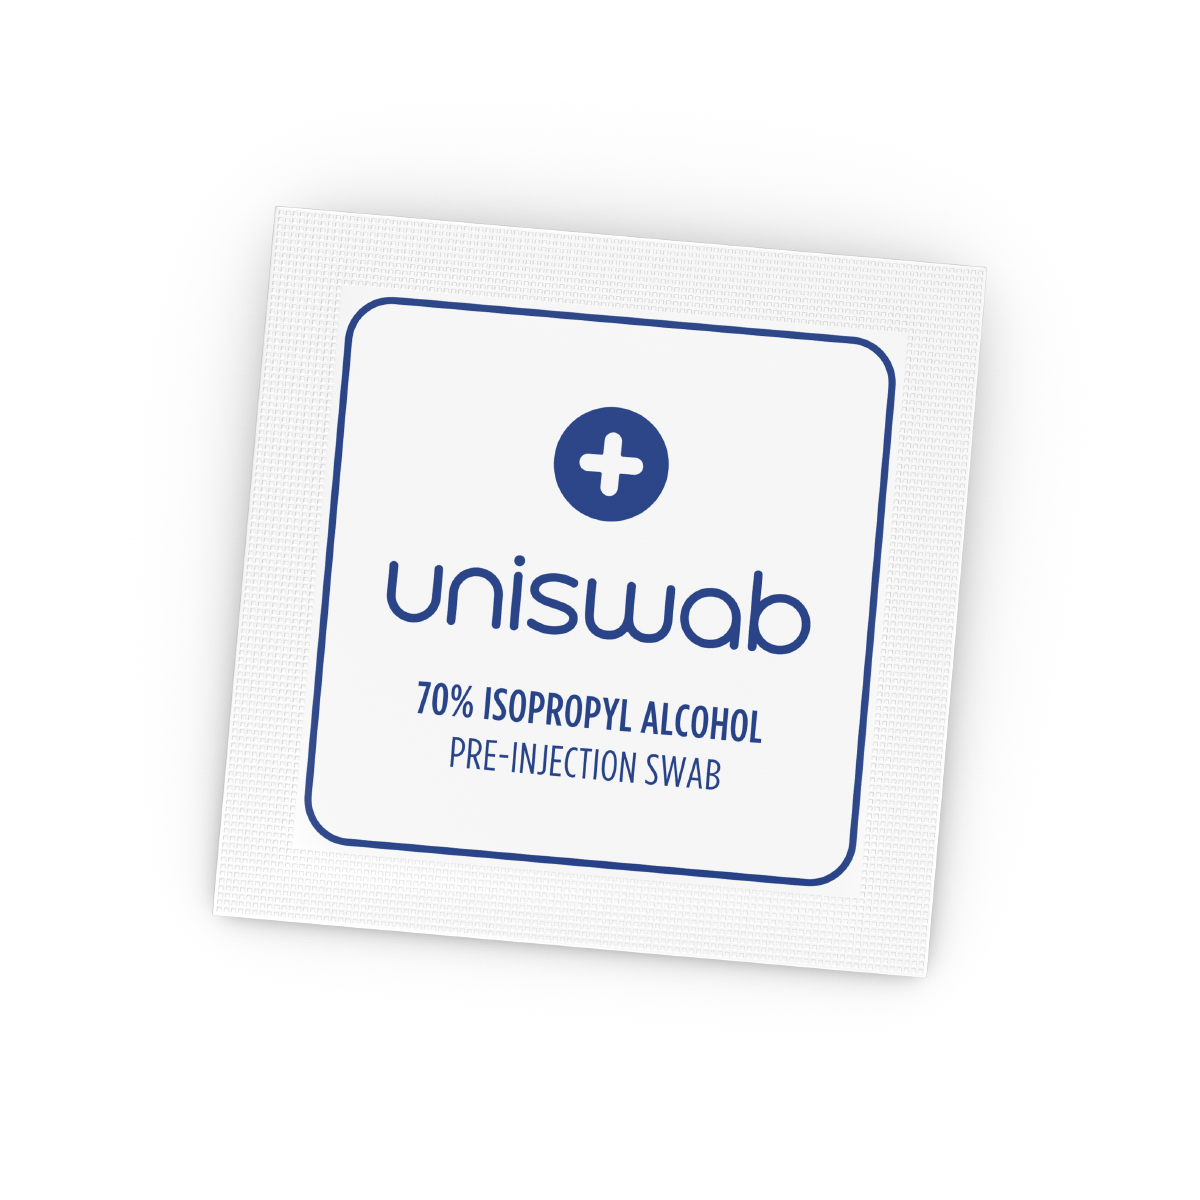 Uniswab pre-injection alcohol swabs